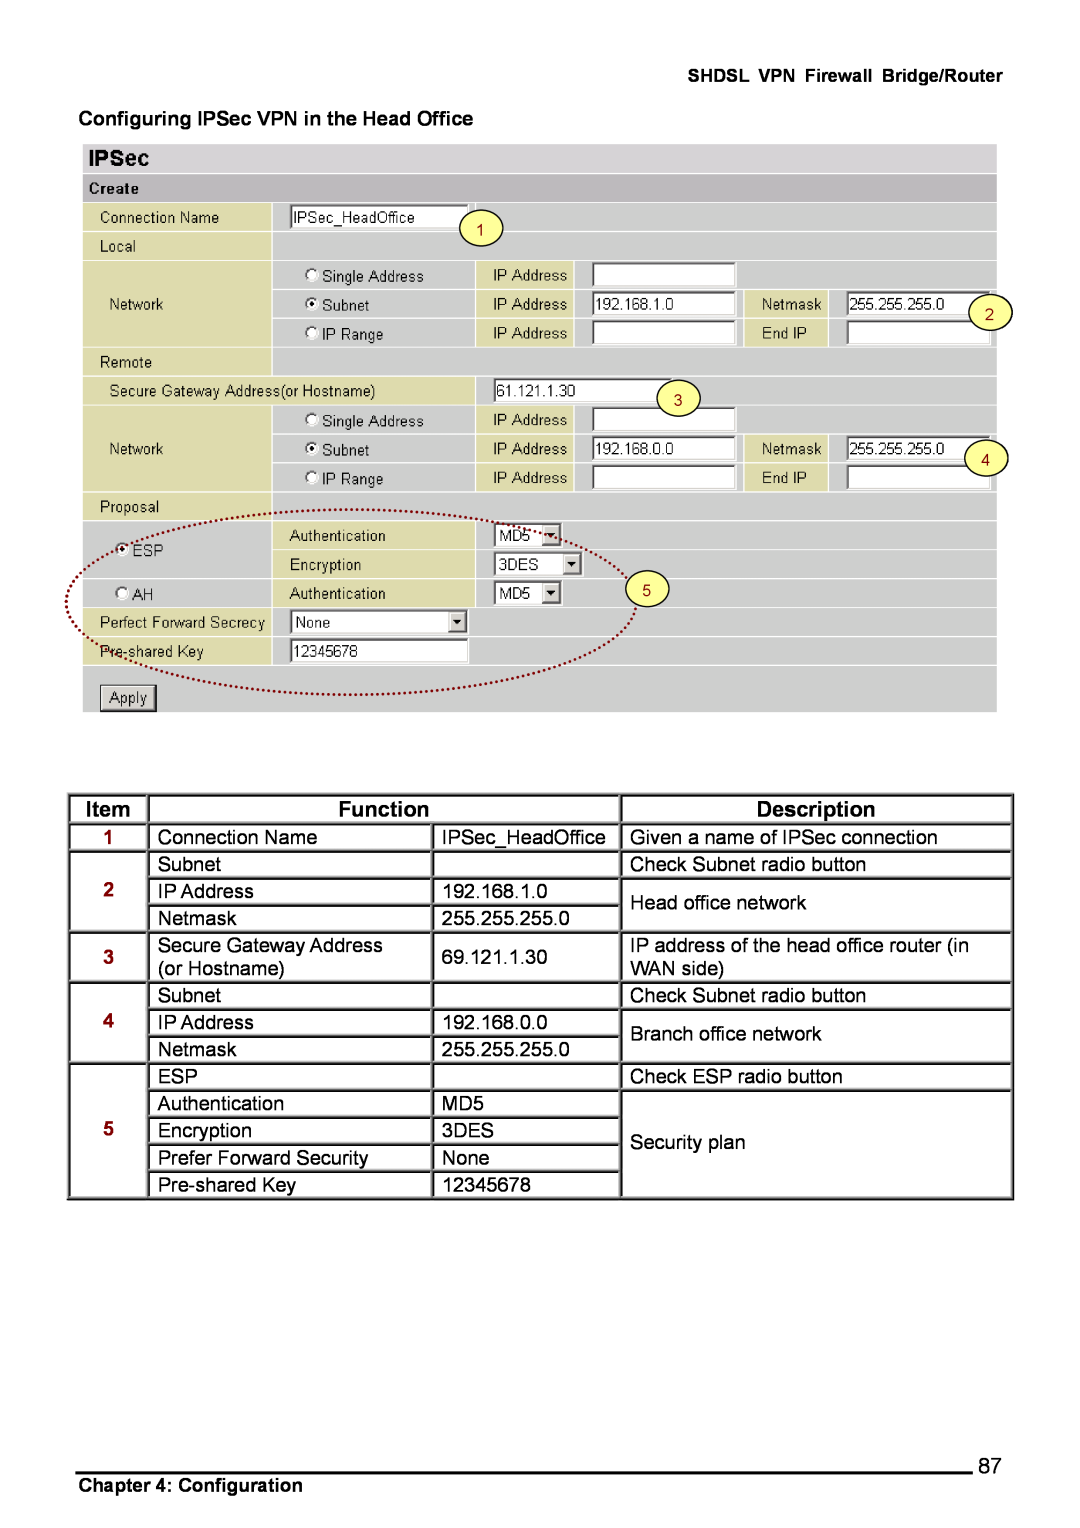 Billion Electric Company 8501 user manual Function, Description, Configuring IPSec VPN in the Head Office 